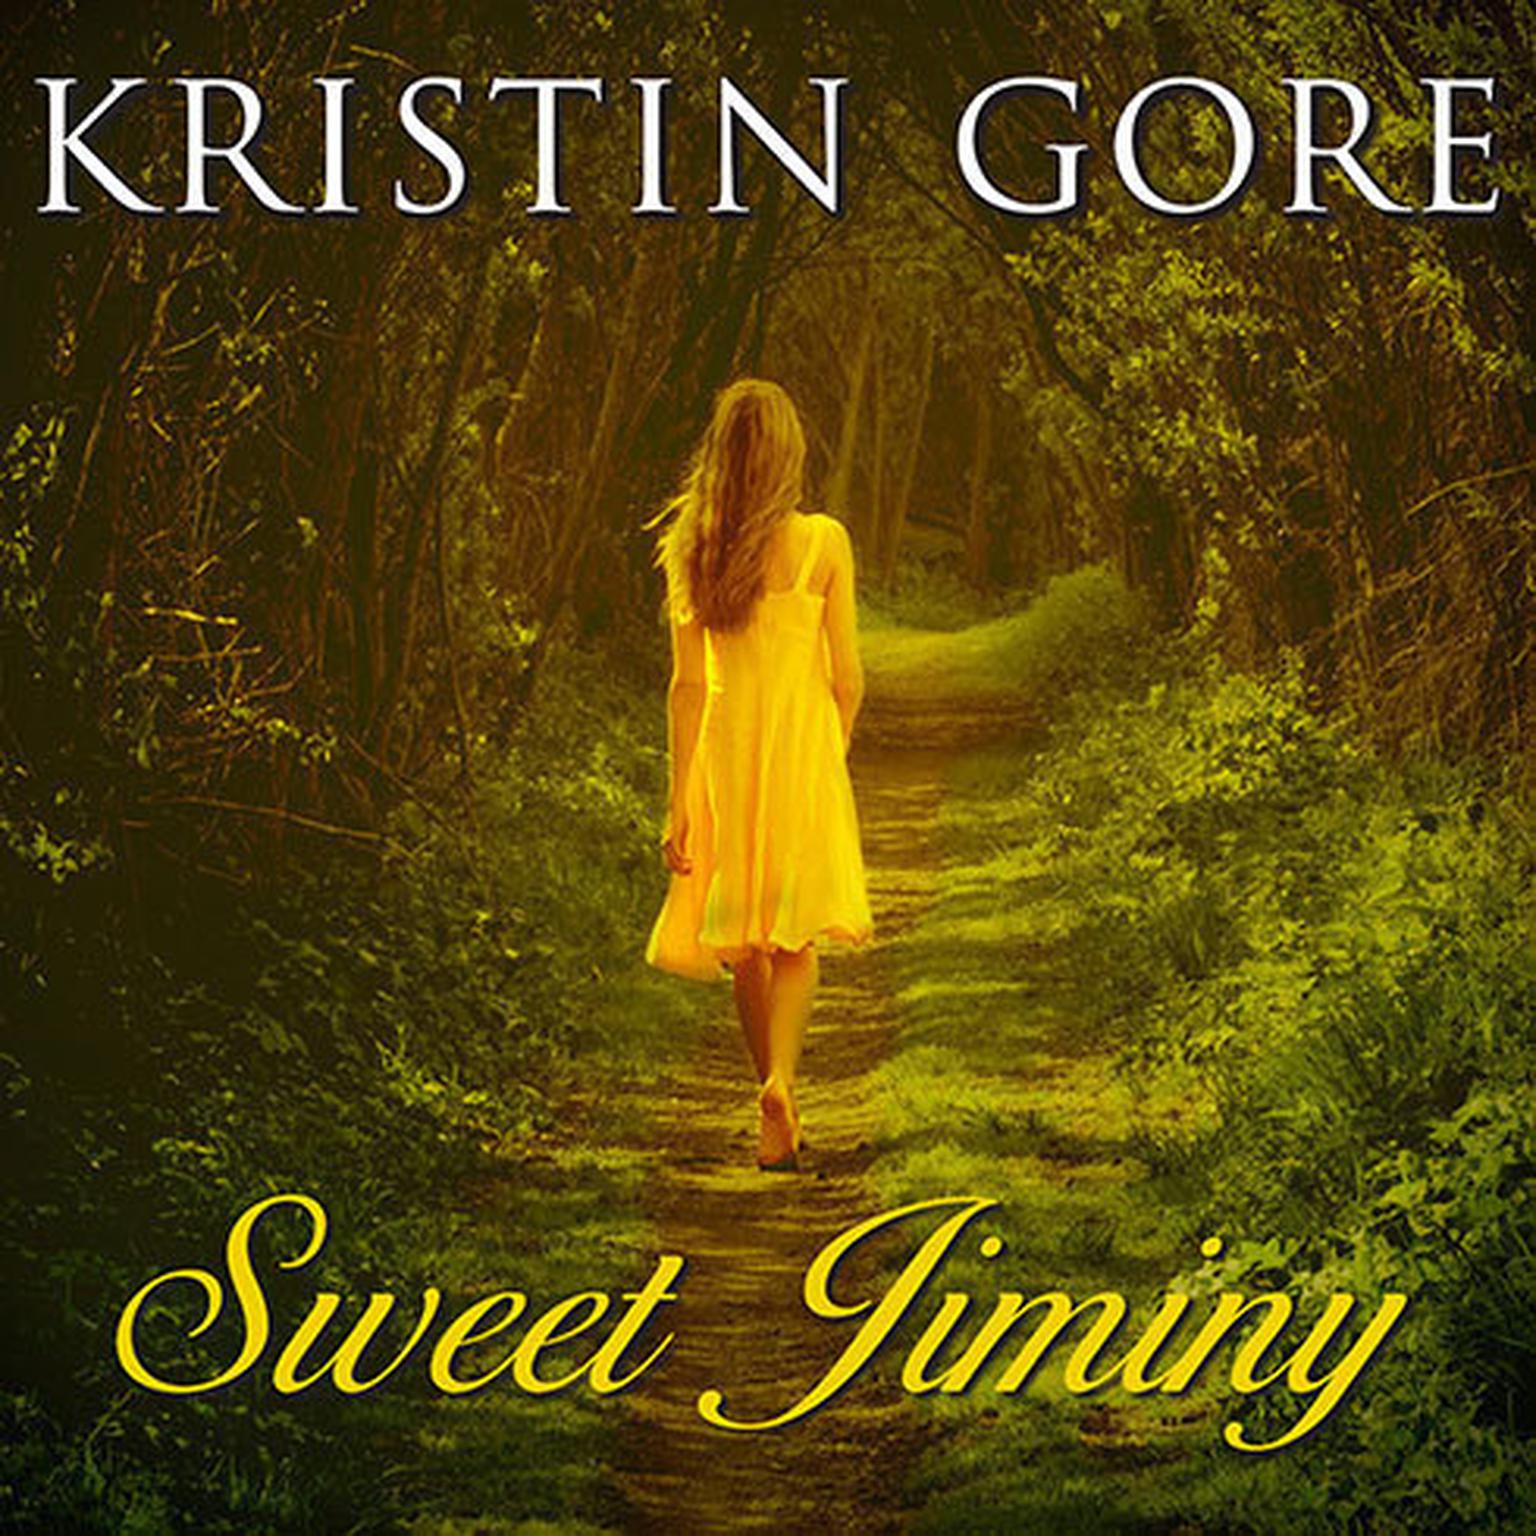 Sweet Jiminy: A Novel Audiobook, by Kristin Gore